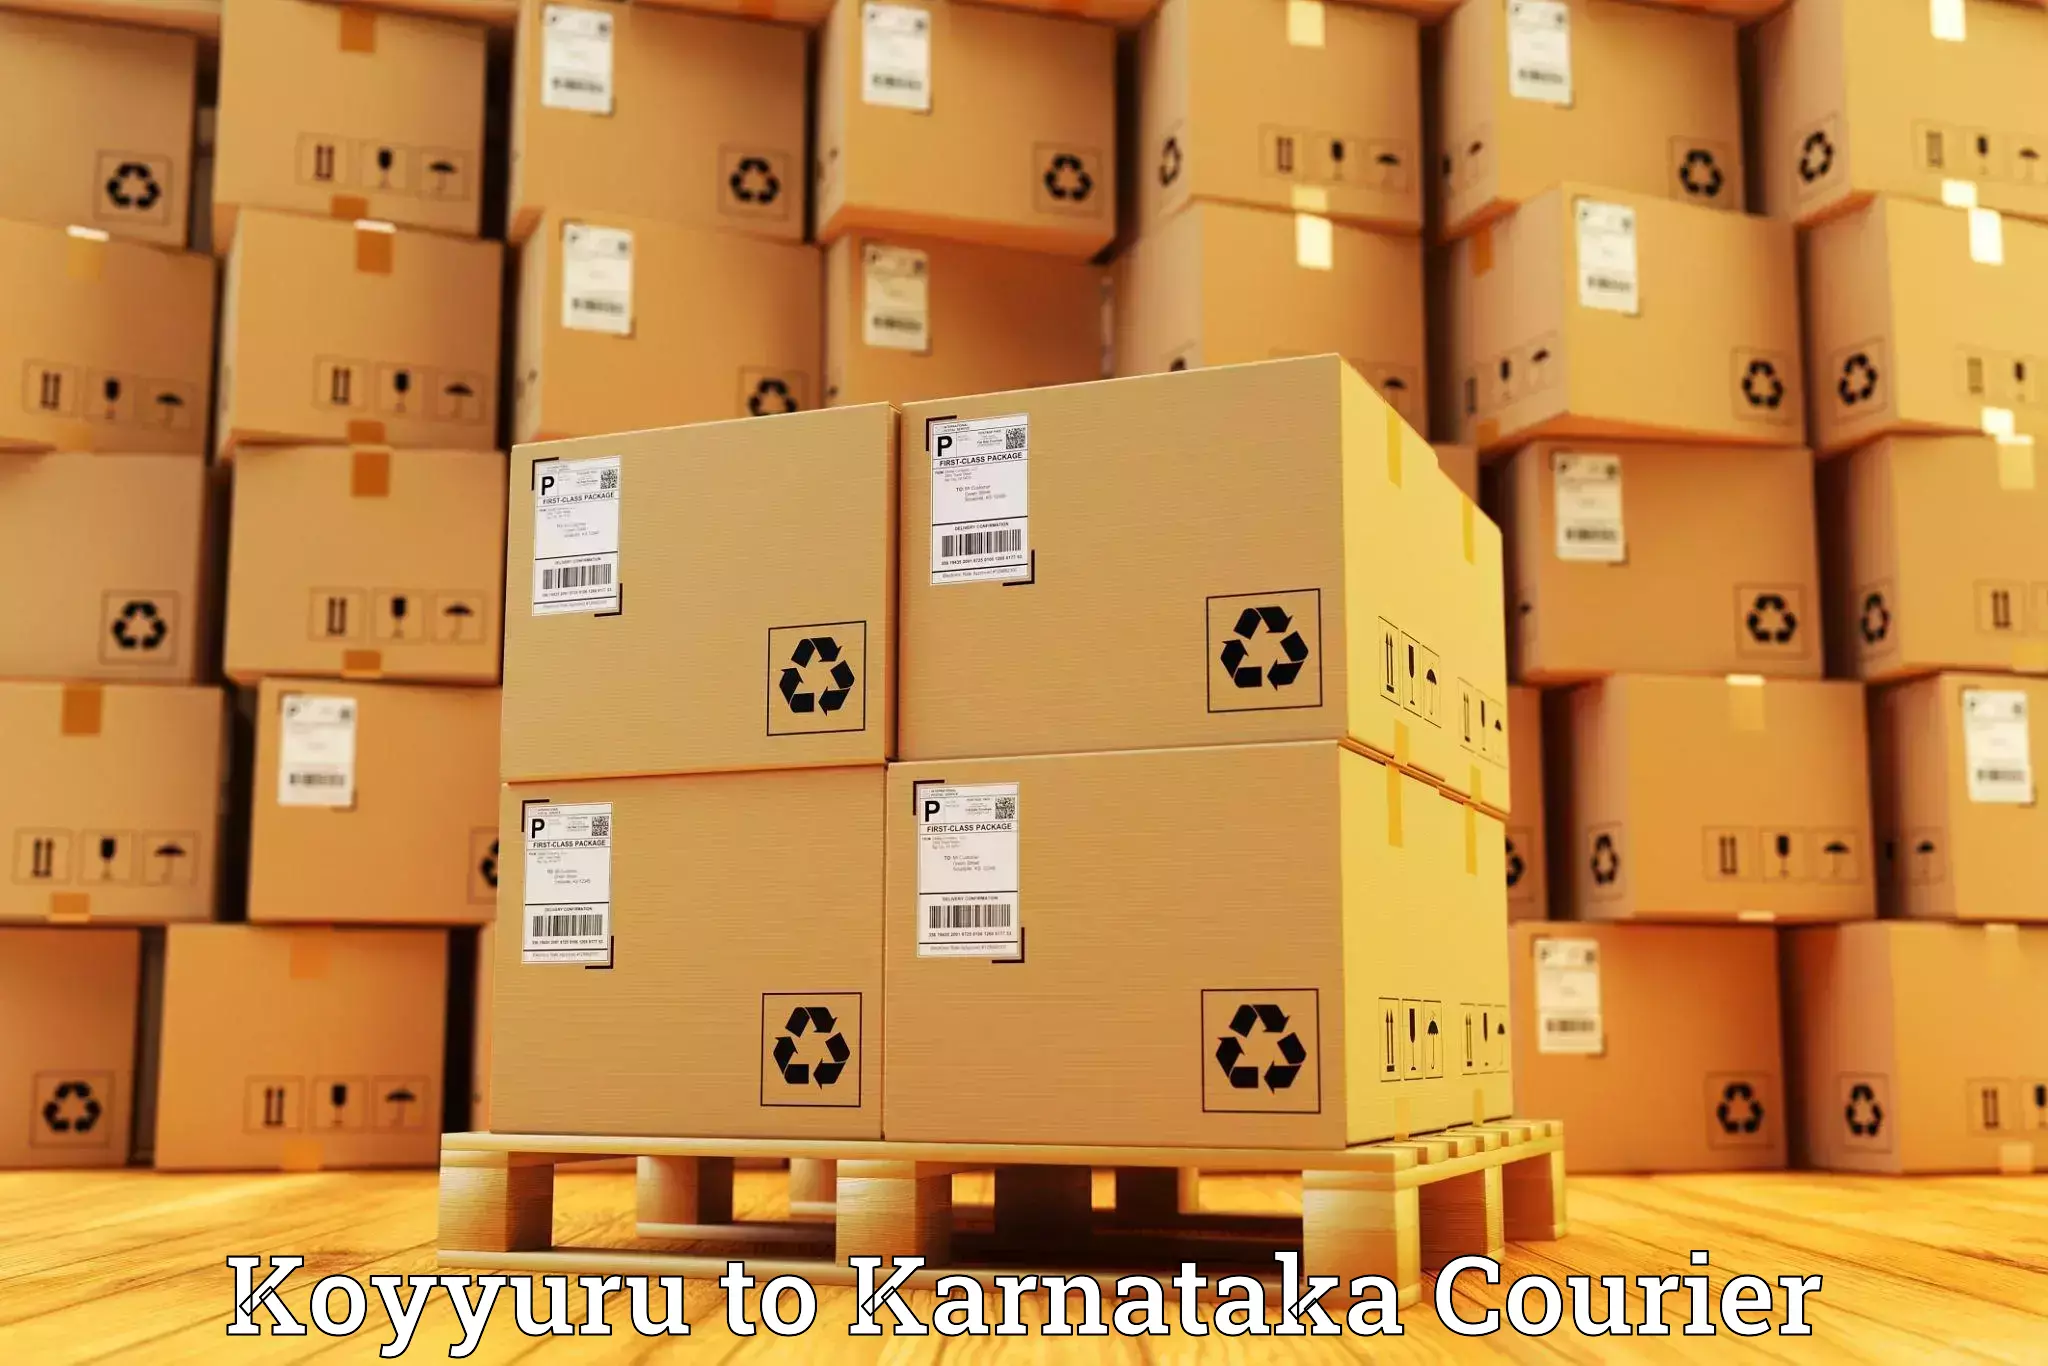 Courier service comparison Koyyuru to Basavanagudi